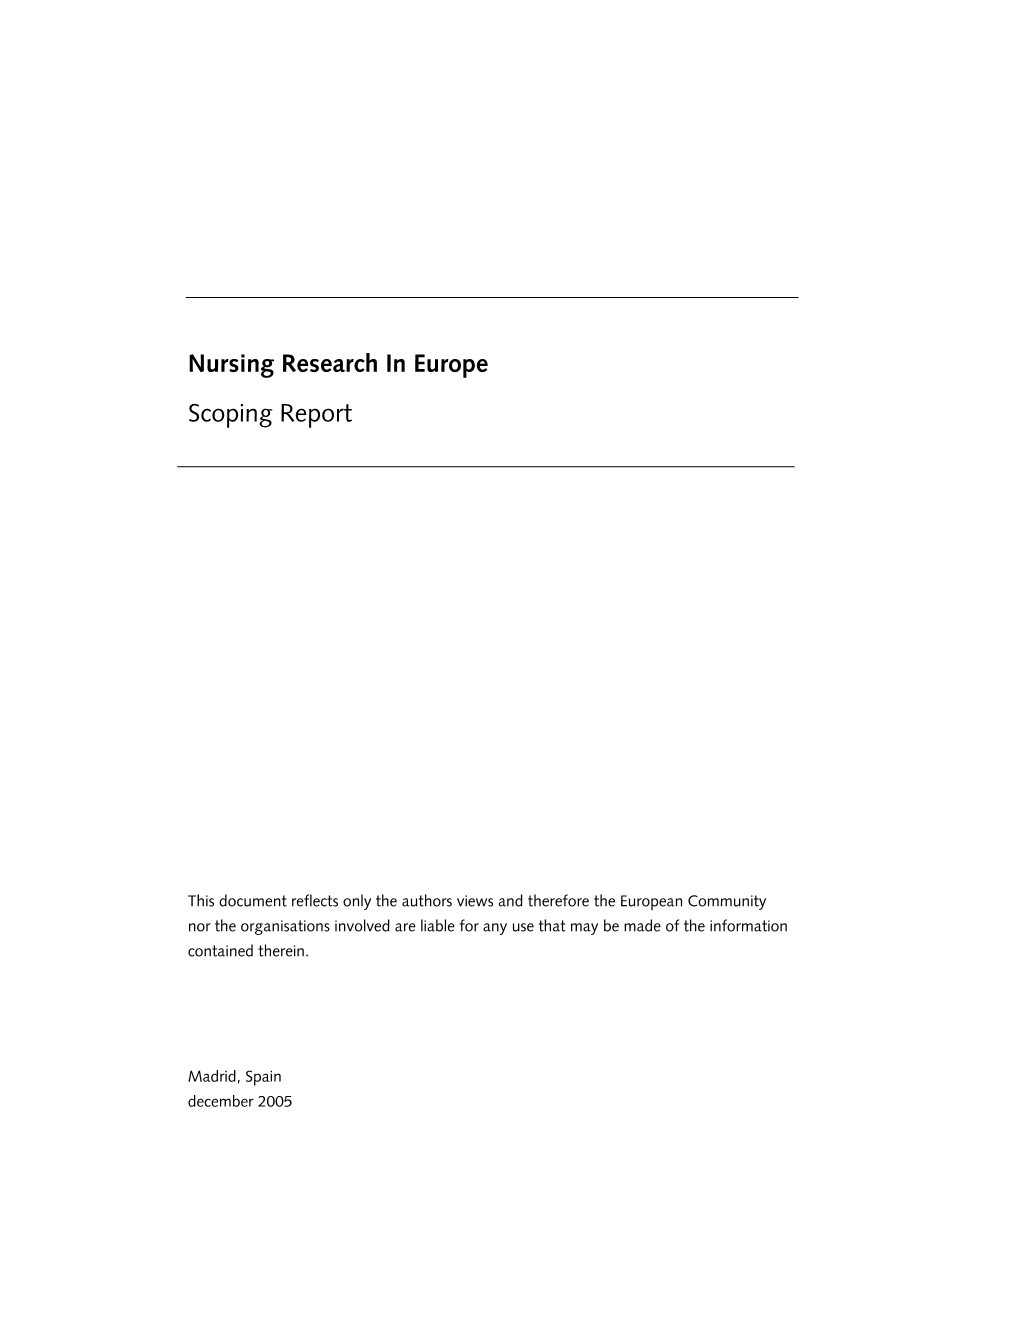 Nursing Research in Europe Scoping Report